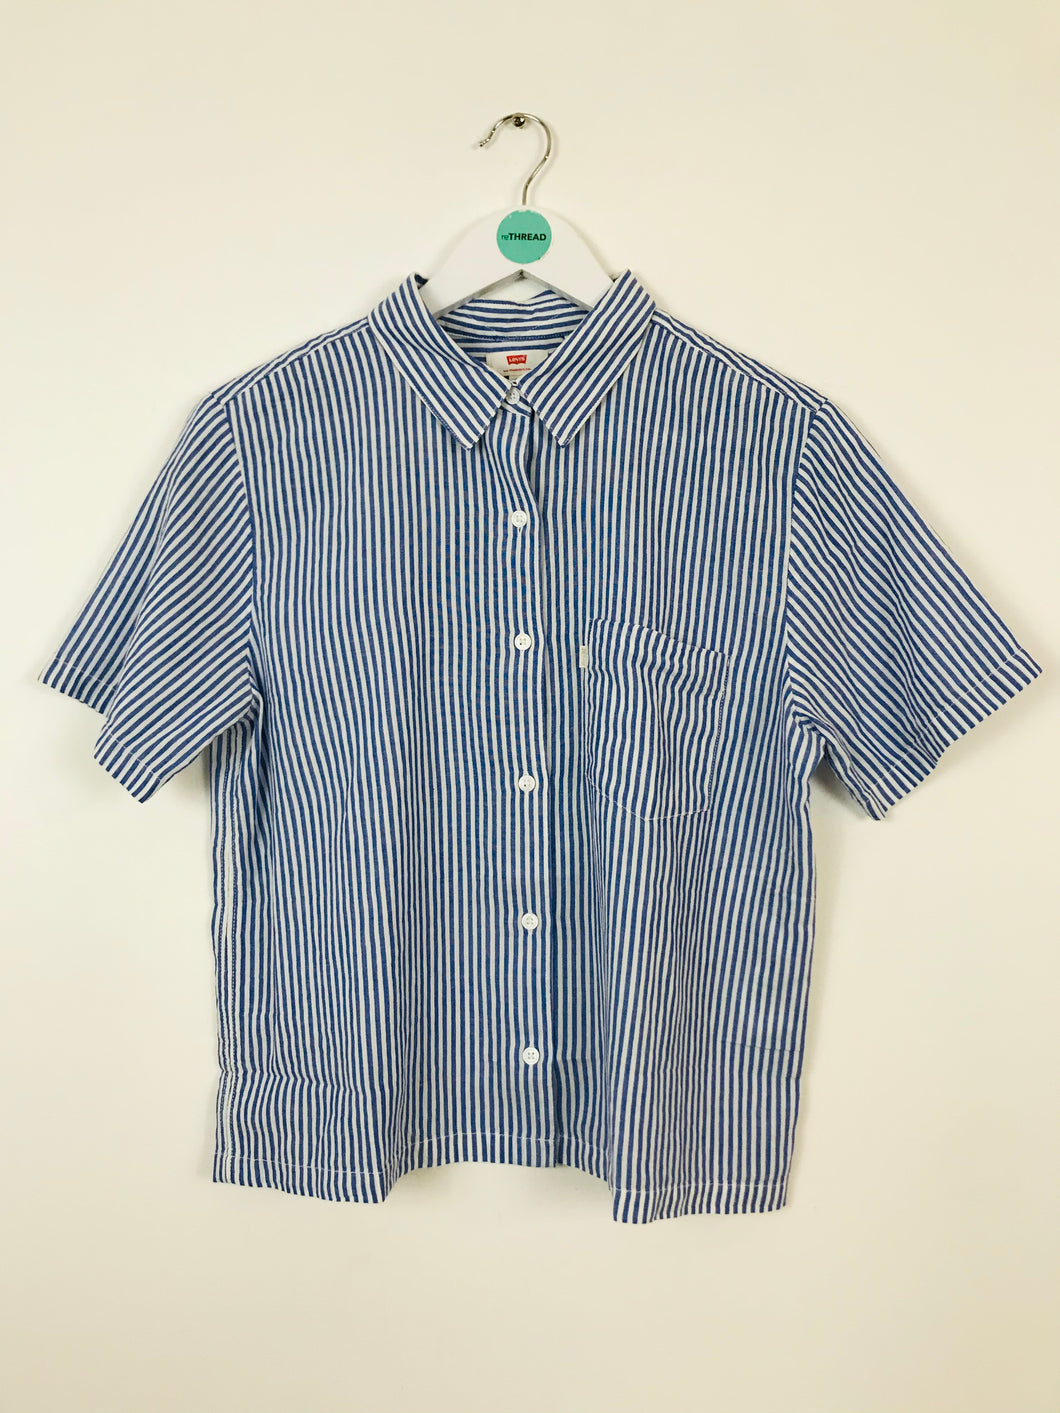 Levi’s Womens Short Sleeve Stripe Shirt | UK10 | Blue and white